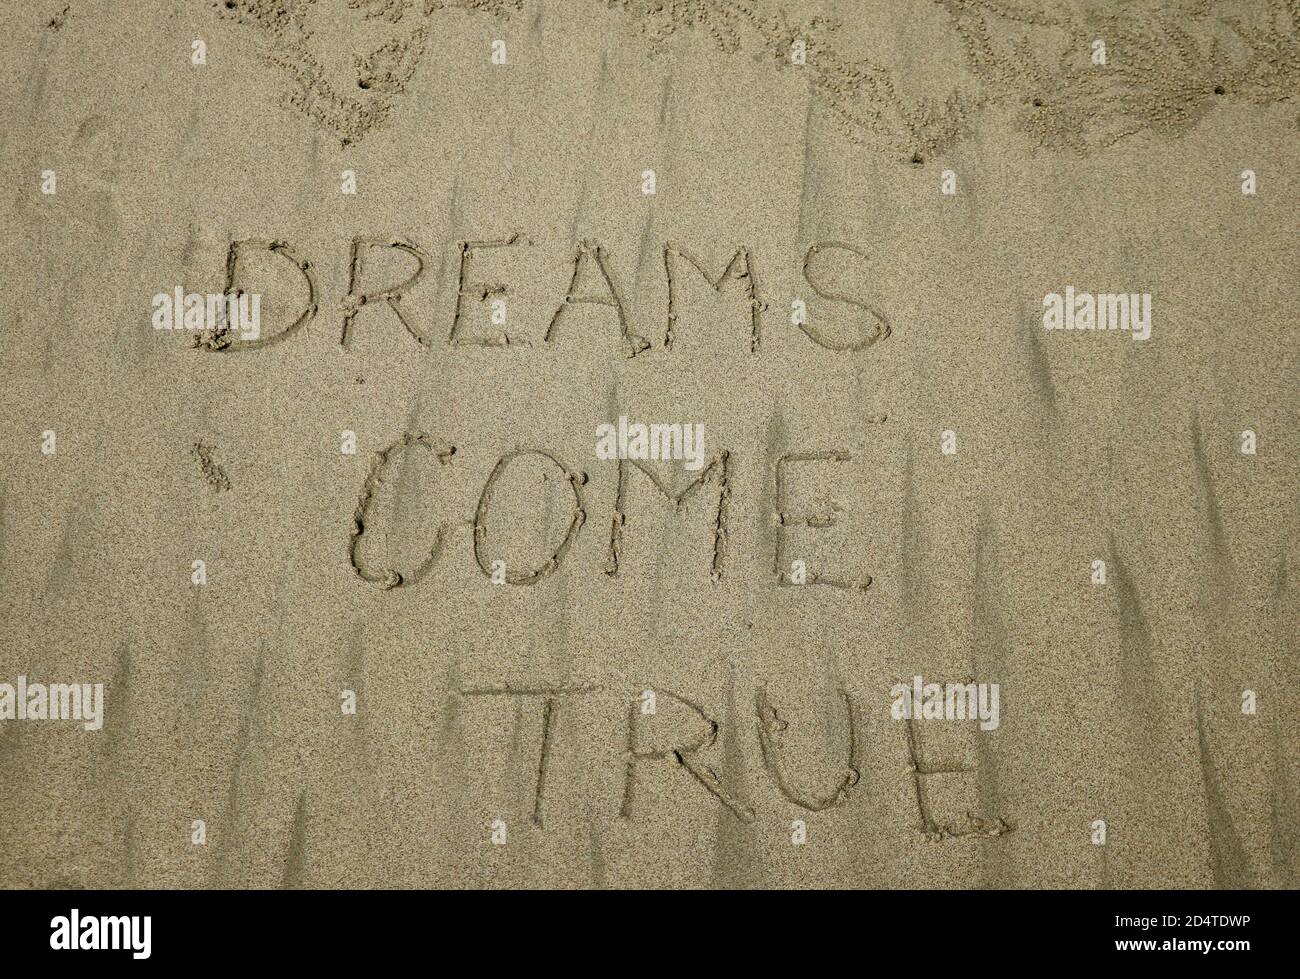 dreams come true, concept on the sand Stock Photo - Alamy